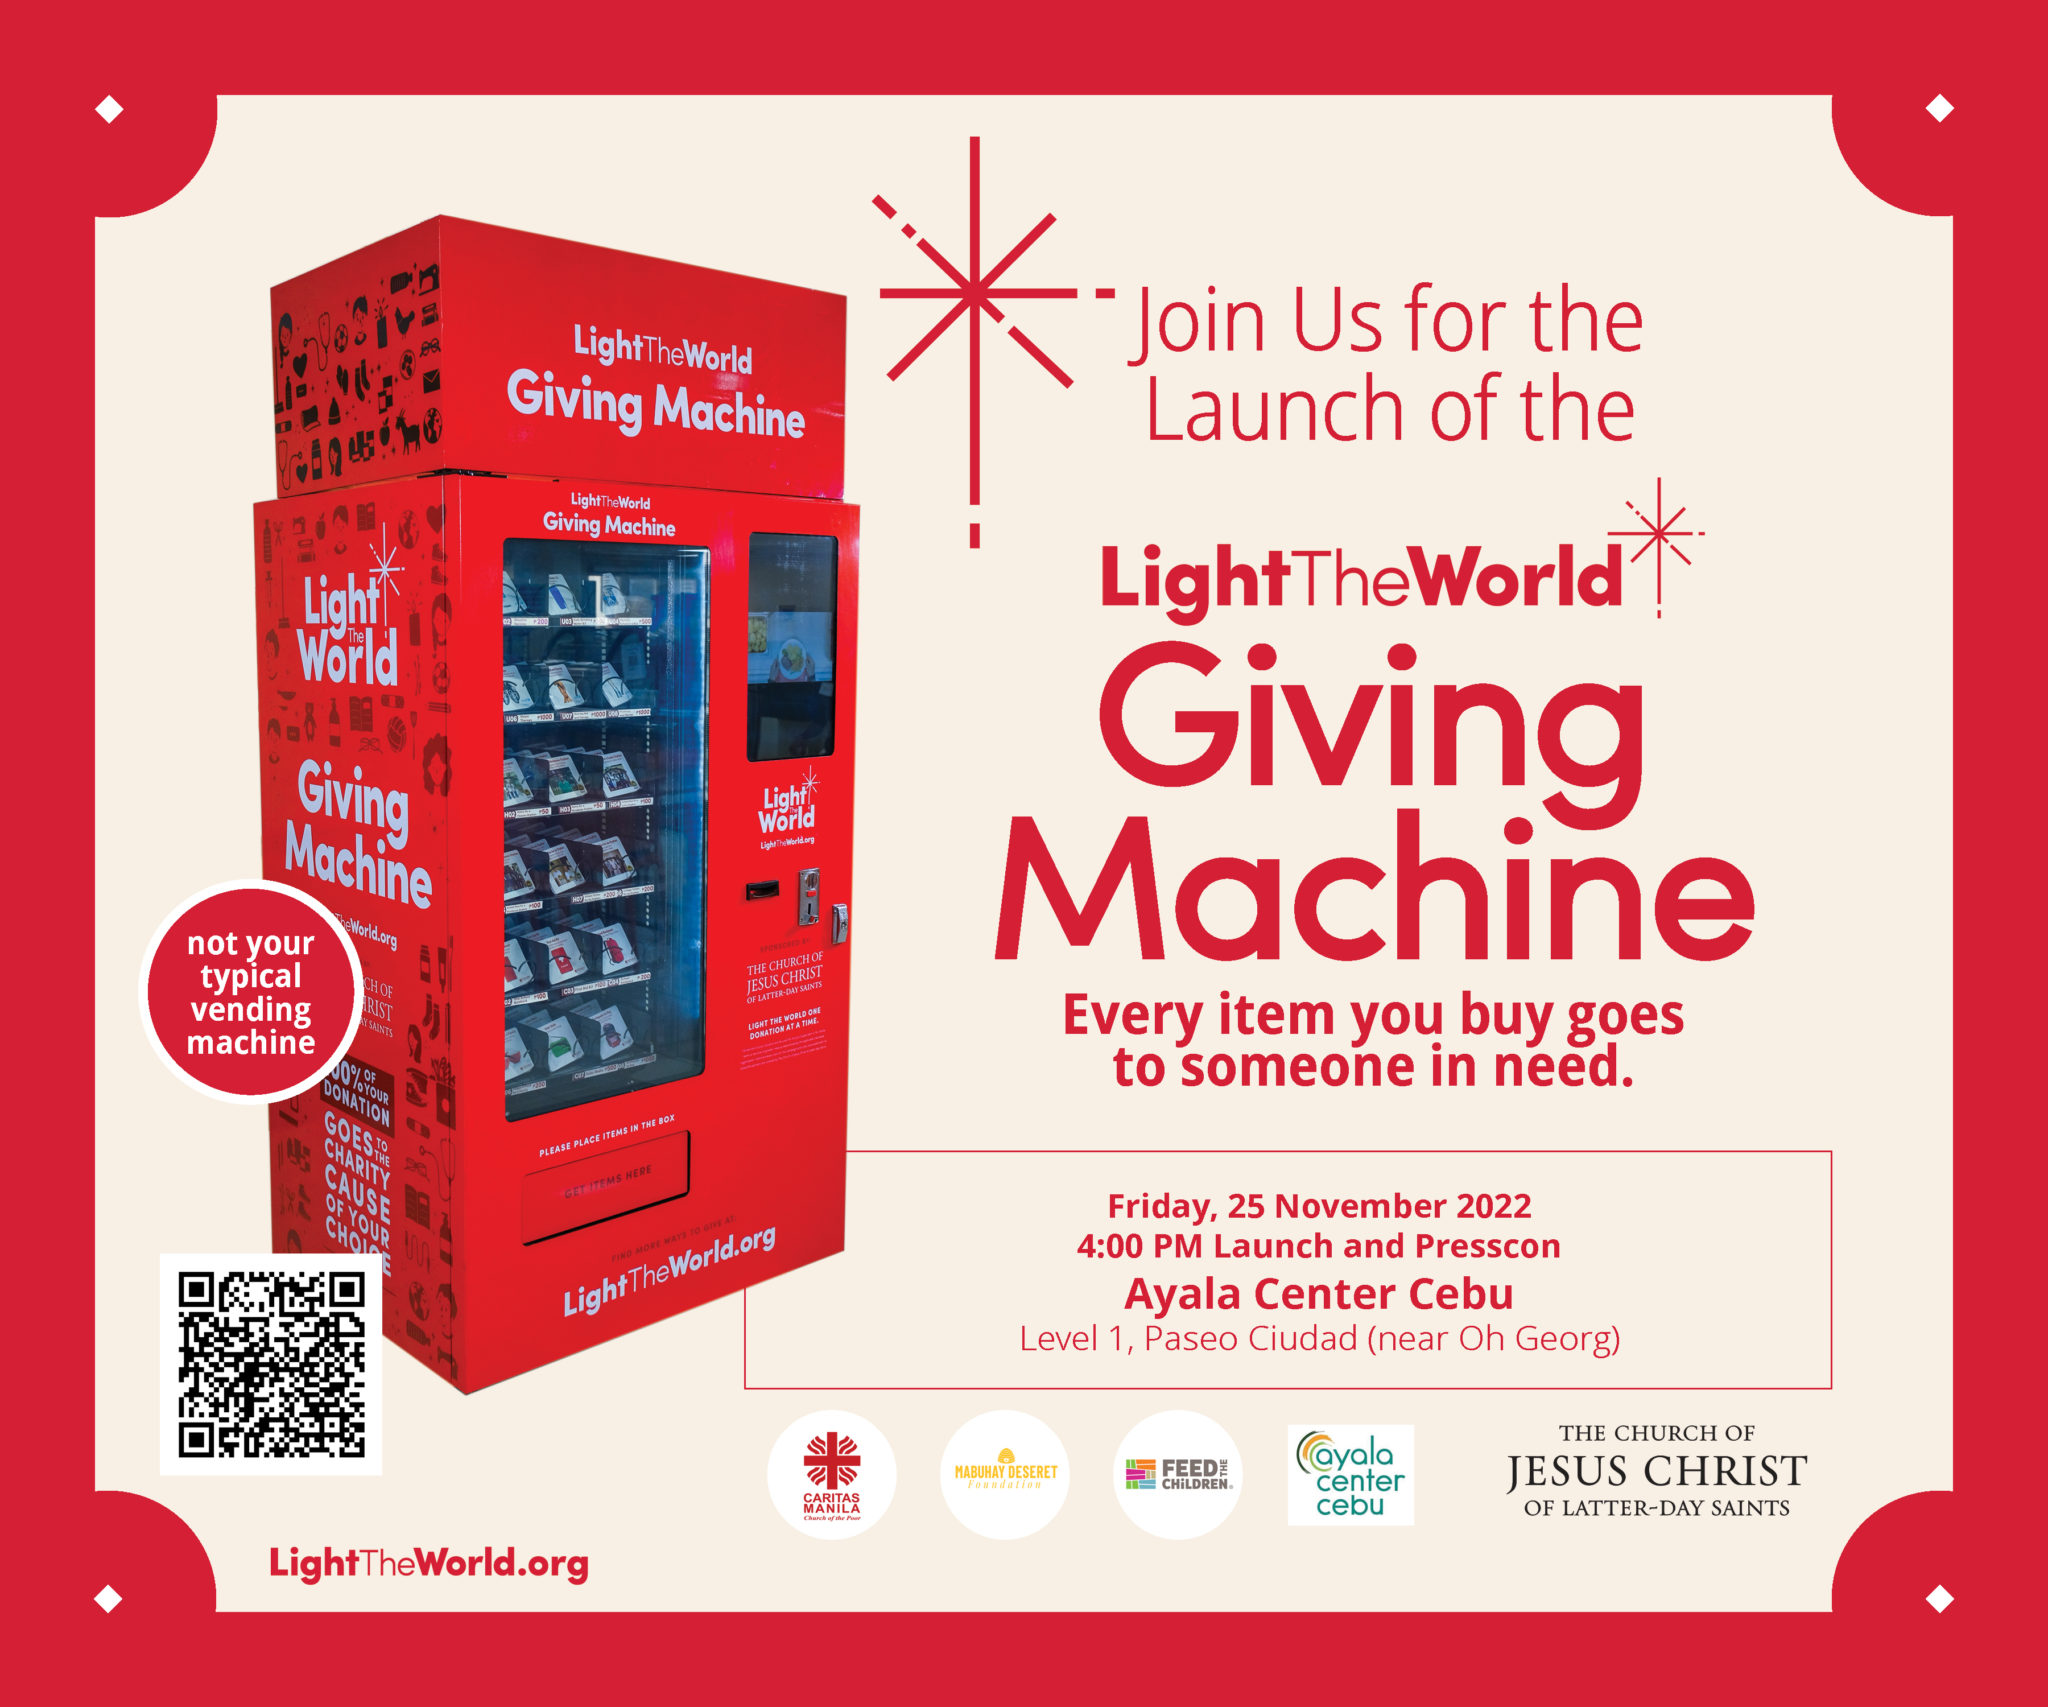 vending-machines-for-charity-returns-to-ph-this-christmas-cebu-daily-news